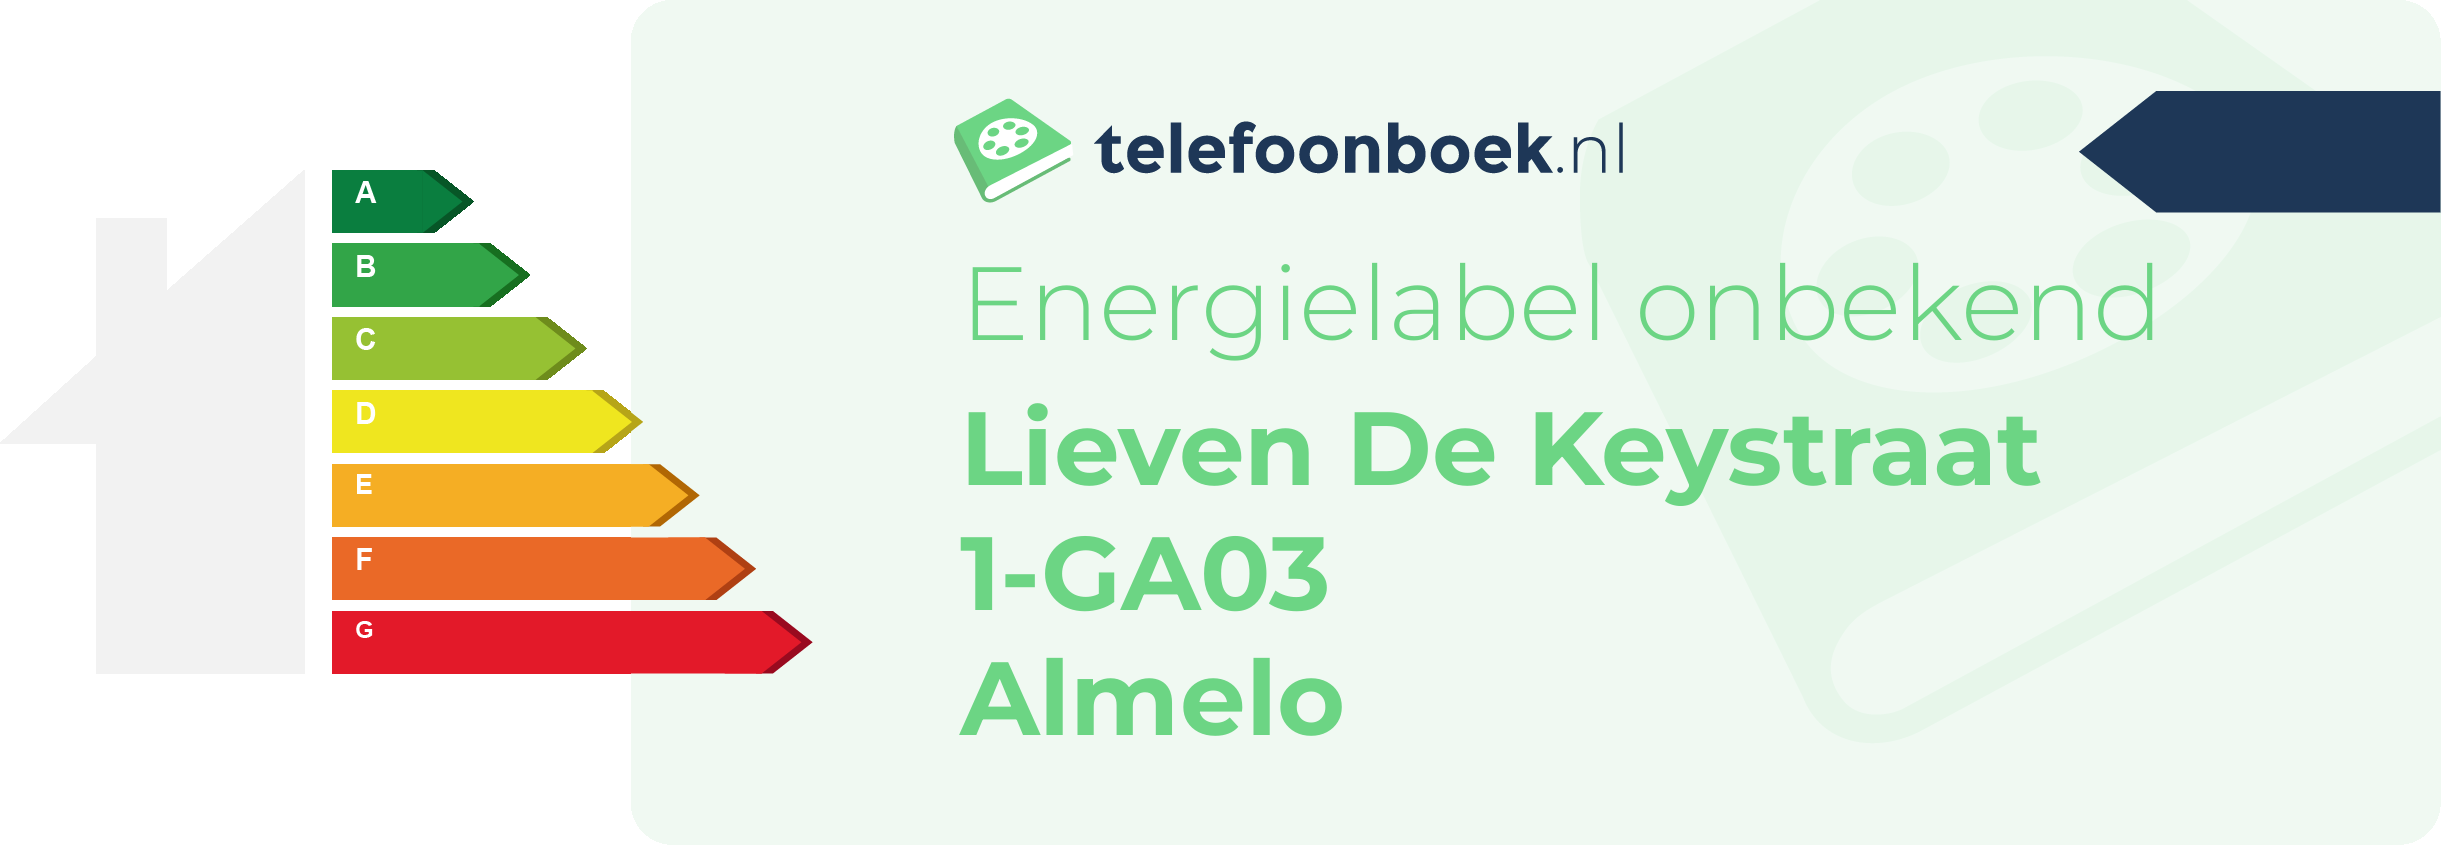 Energielabel Lieven De Keystraat 1-GA03 Almelo